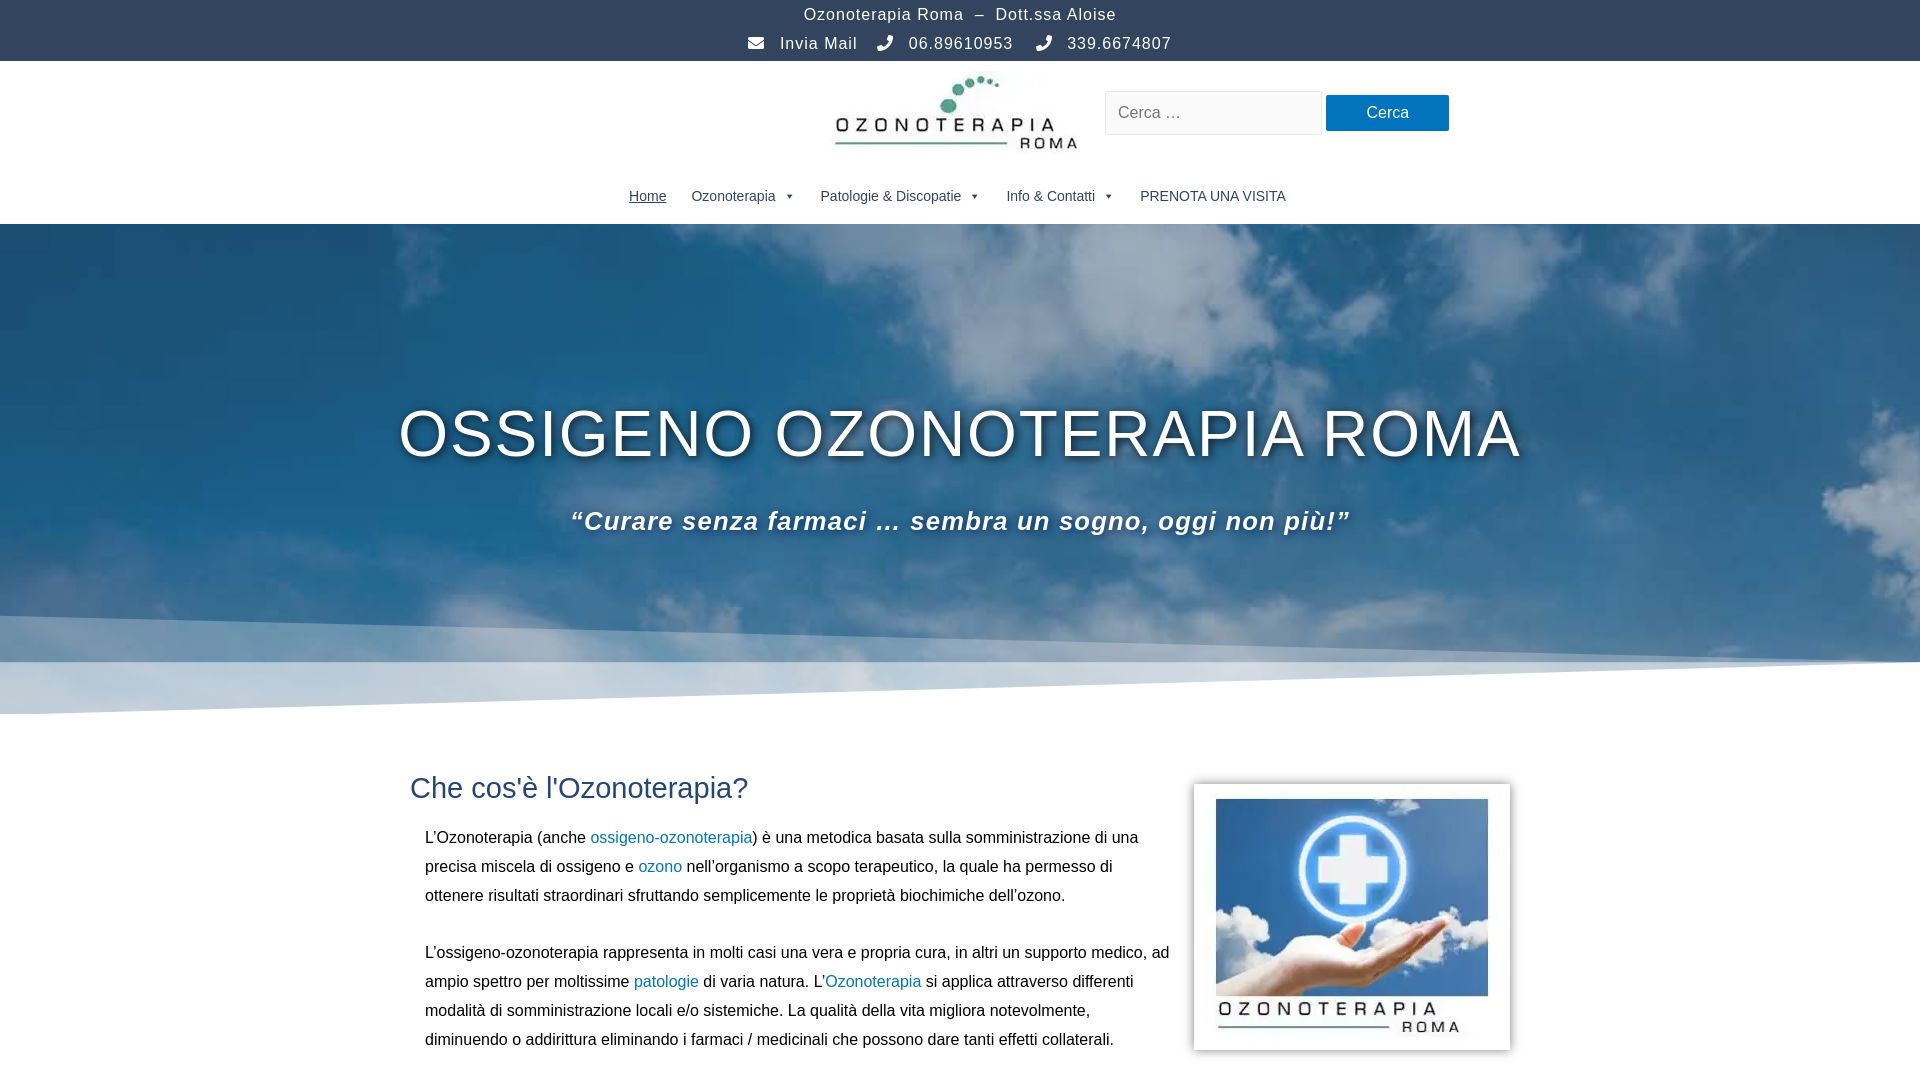 Website status ozonoterapiaroma.it is   ONLINE